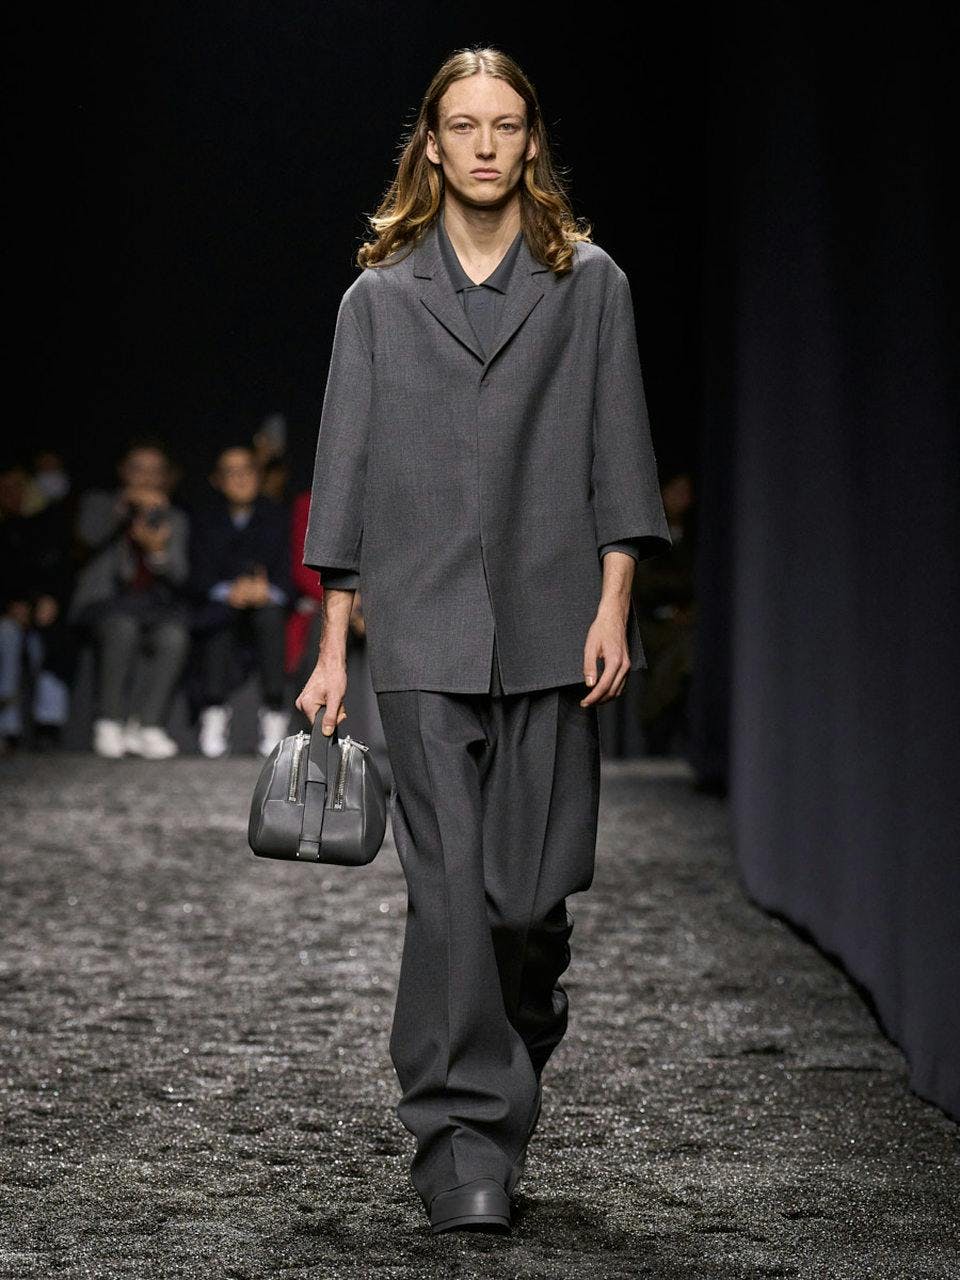 fashion handbag bag accessories suit formal wear clothing coat person